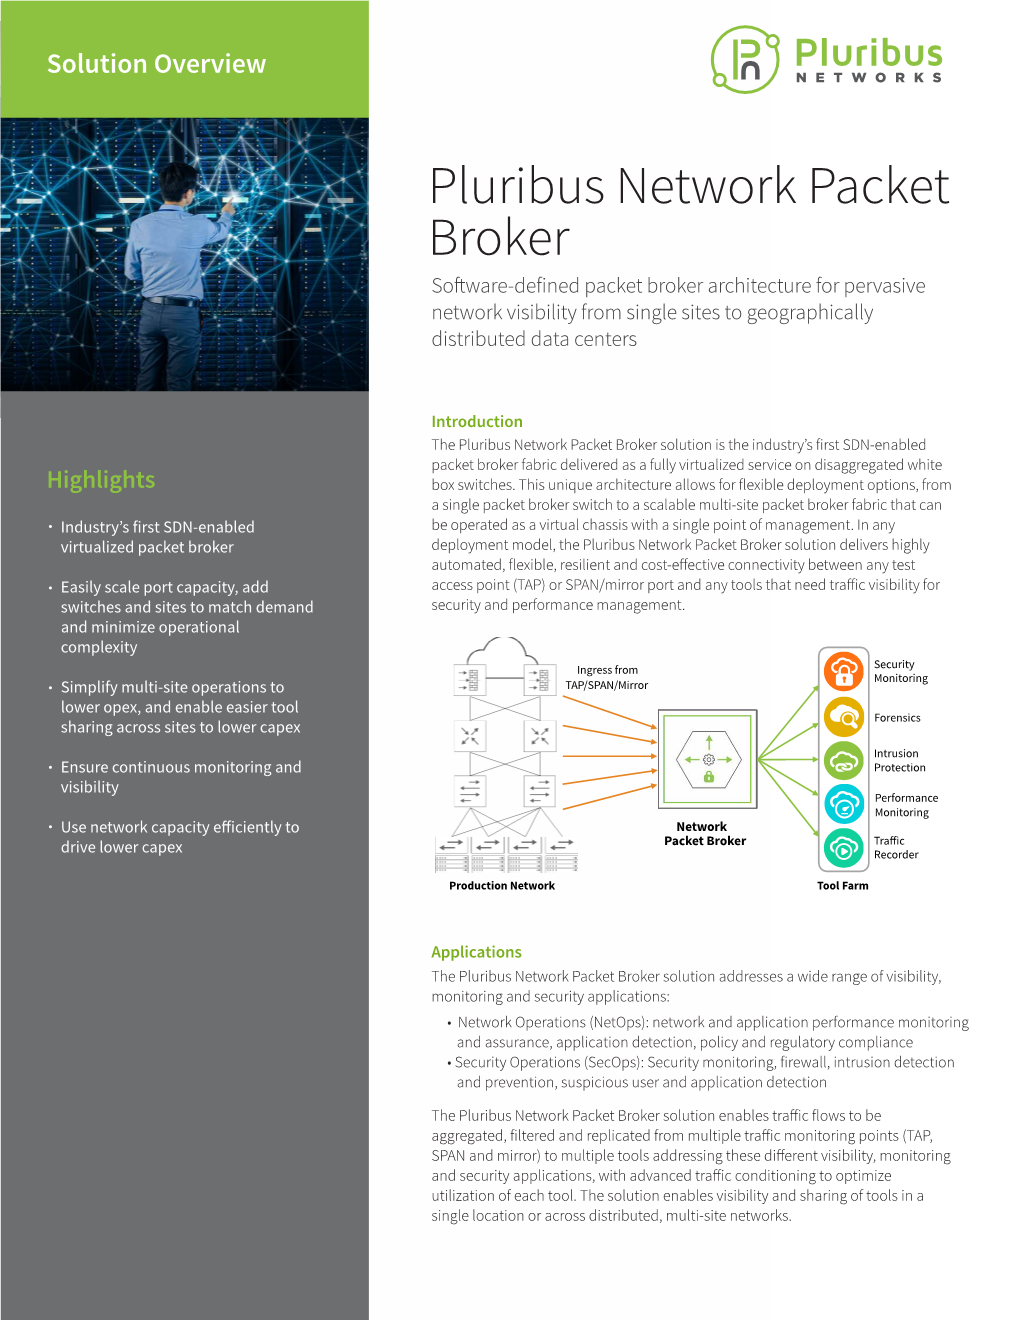 Pluribus Network Packet Broker